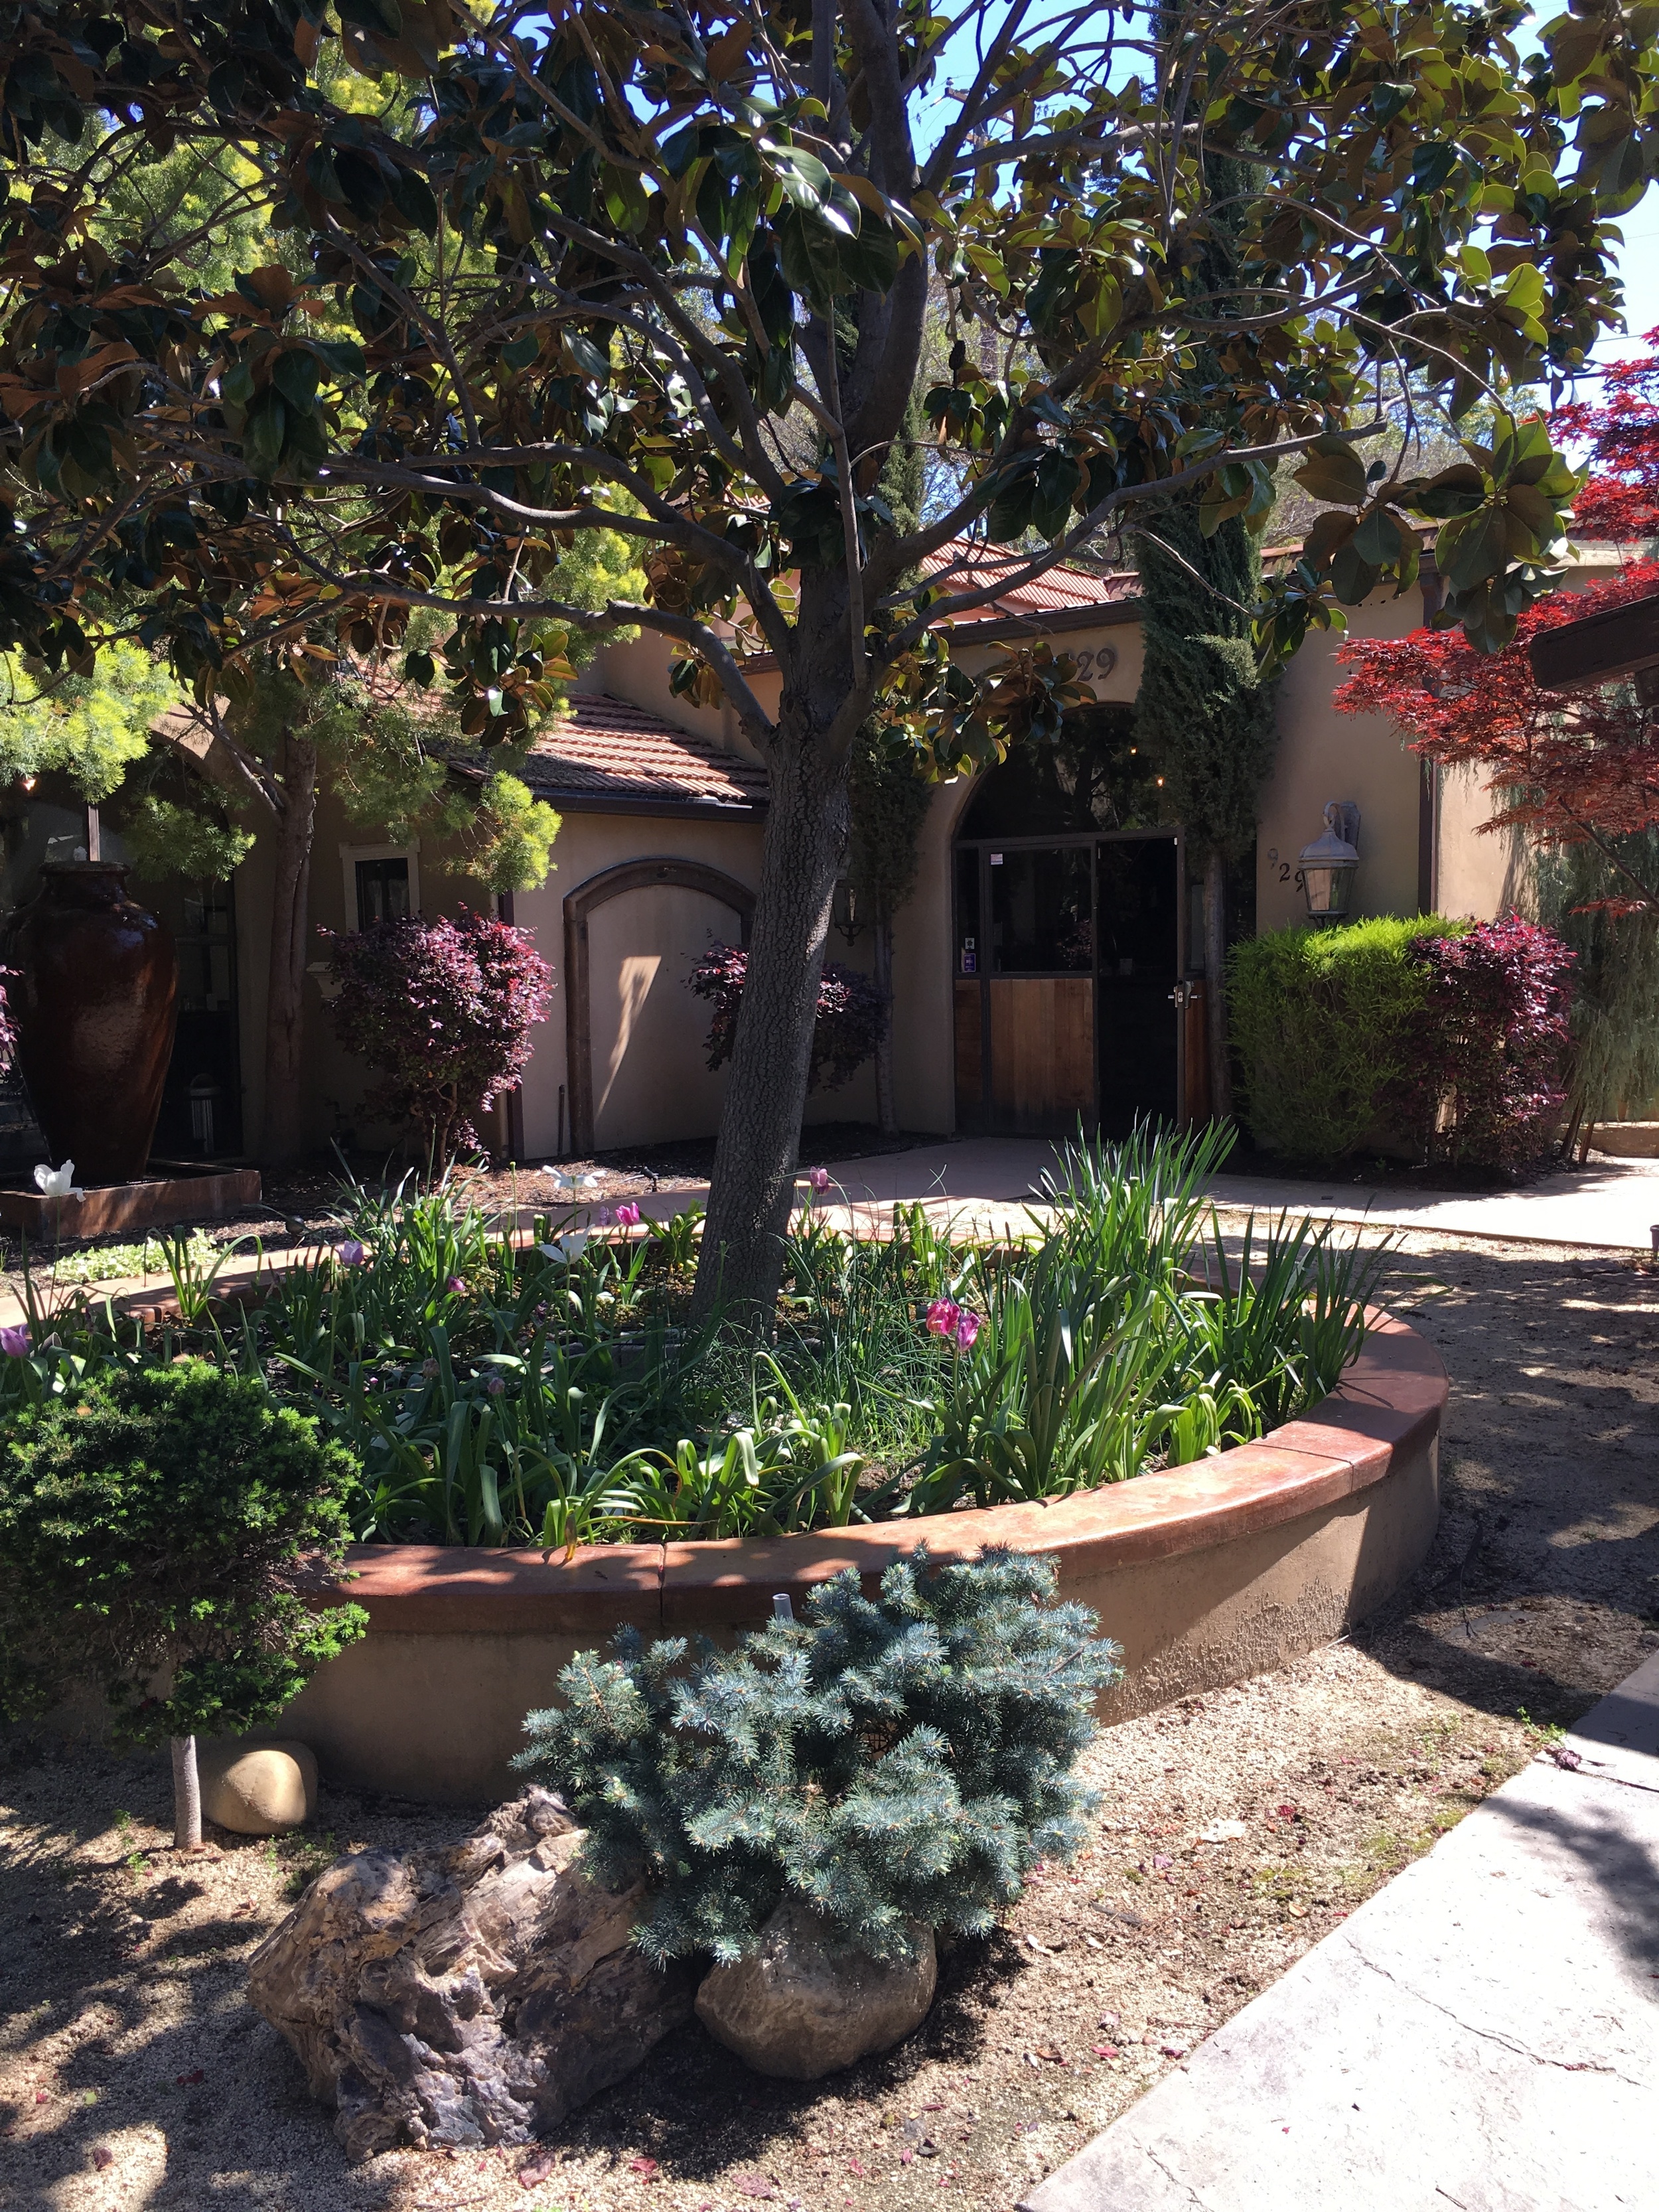 Garden-and-event-space-sutter-street-folsom-sacramento-area-california.JPG